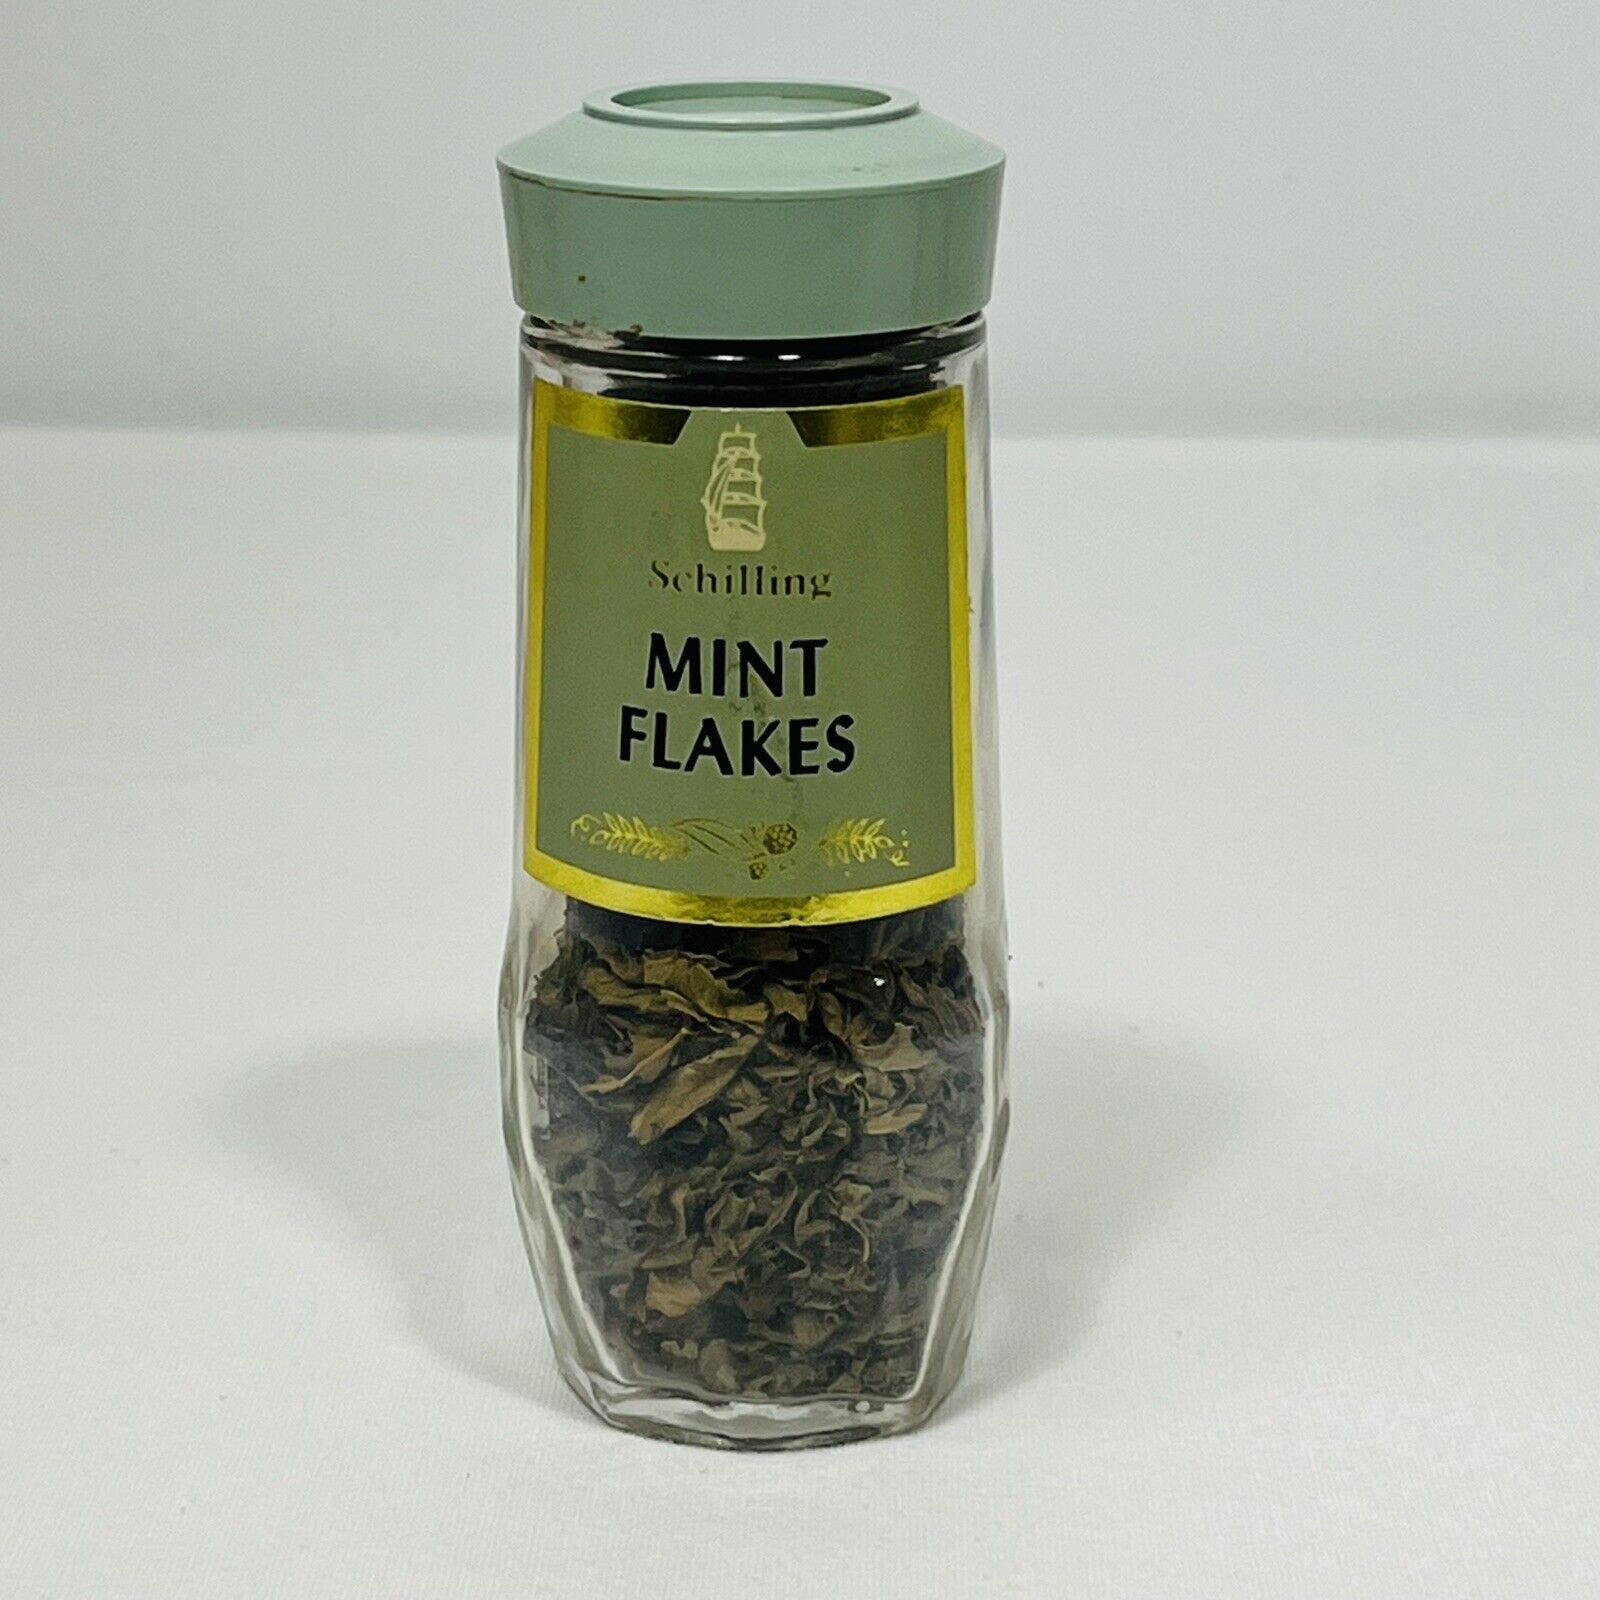 Schilling McCormick Mint Flakes Glass Bottle Green Lid Vintage